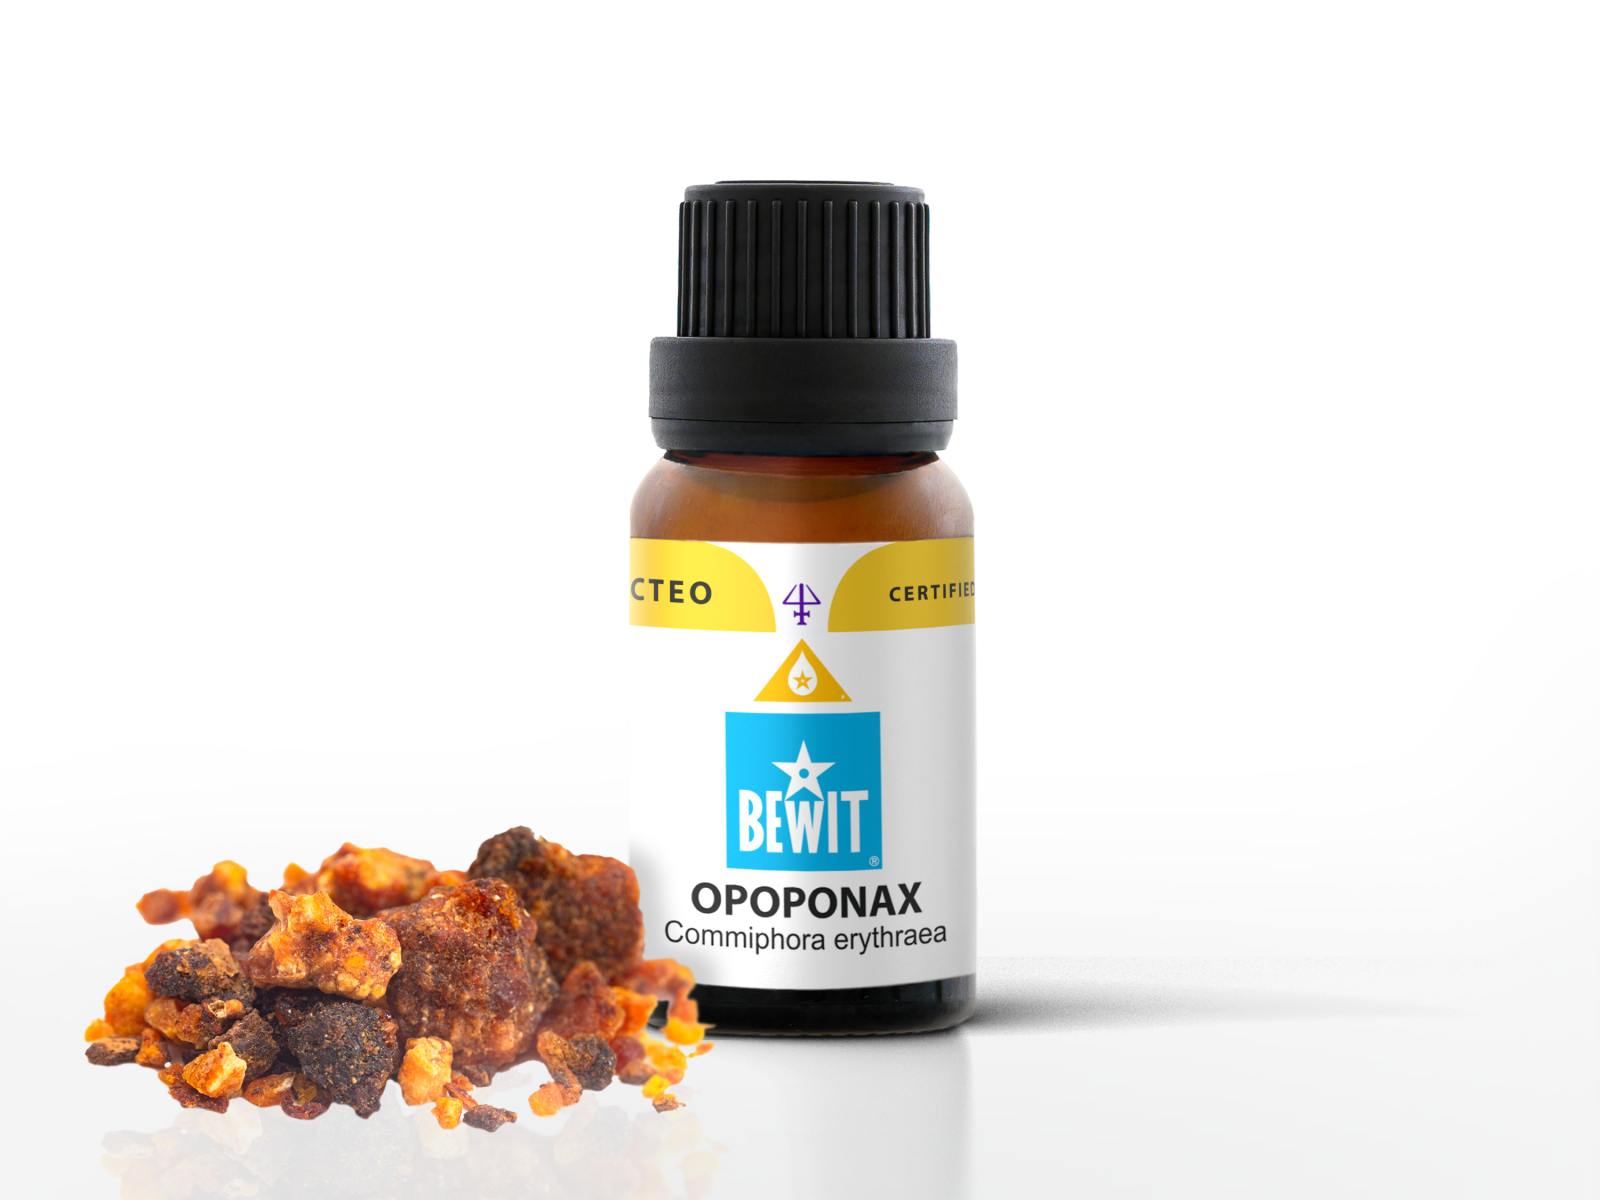 BEWIT Opoponax (sweet myrrh) - 100% pure essential oil